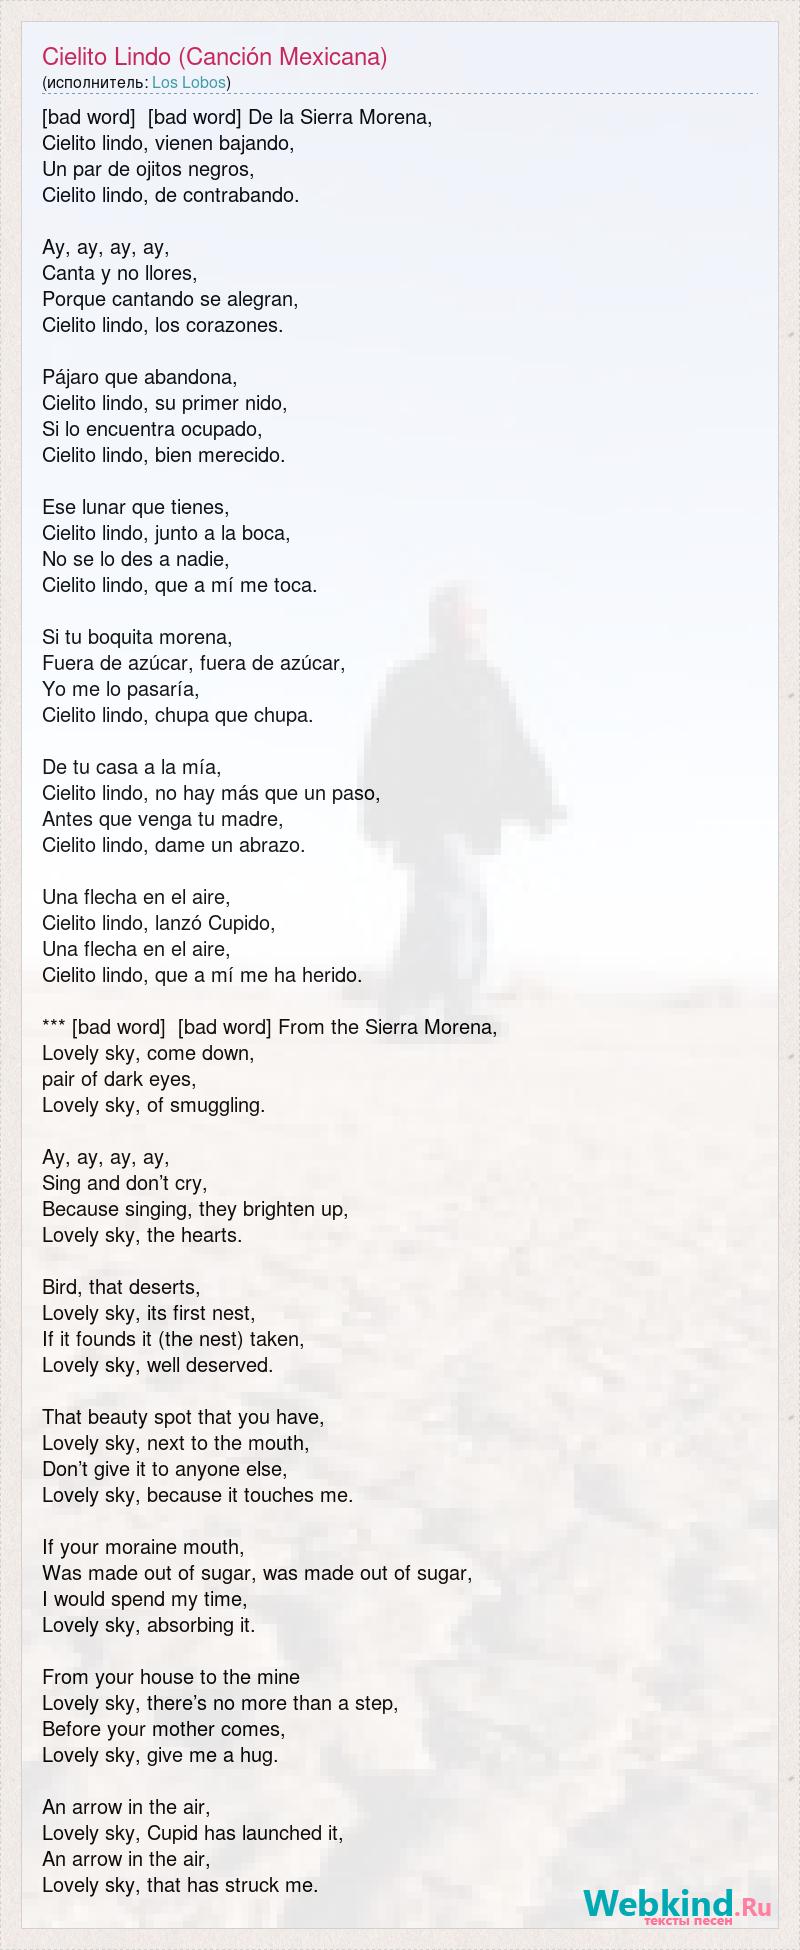 Текст песни Cielito Lindo (Canción Mexicana), слова песни